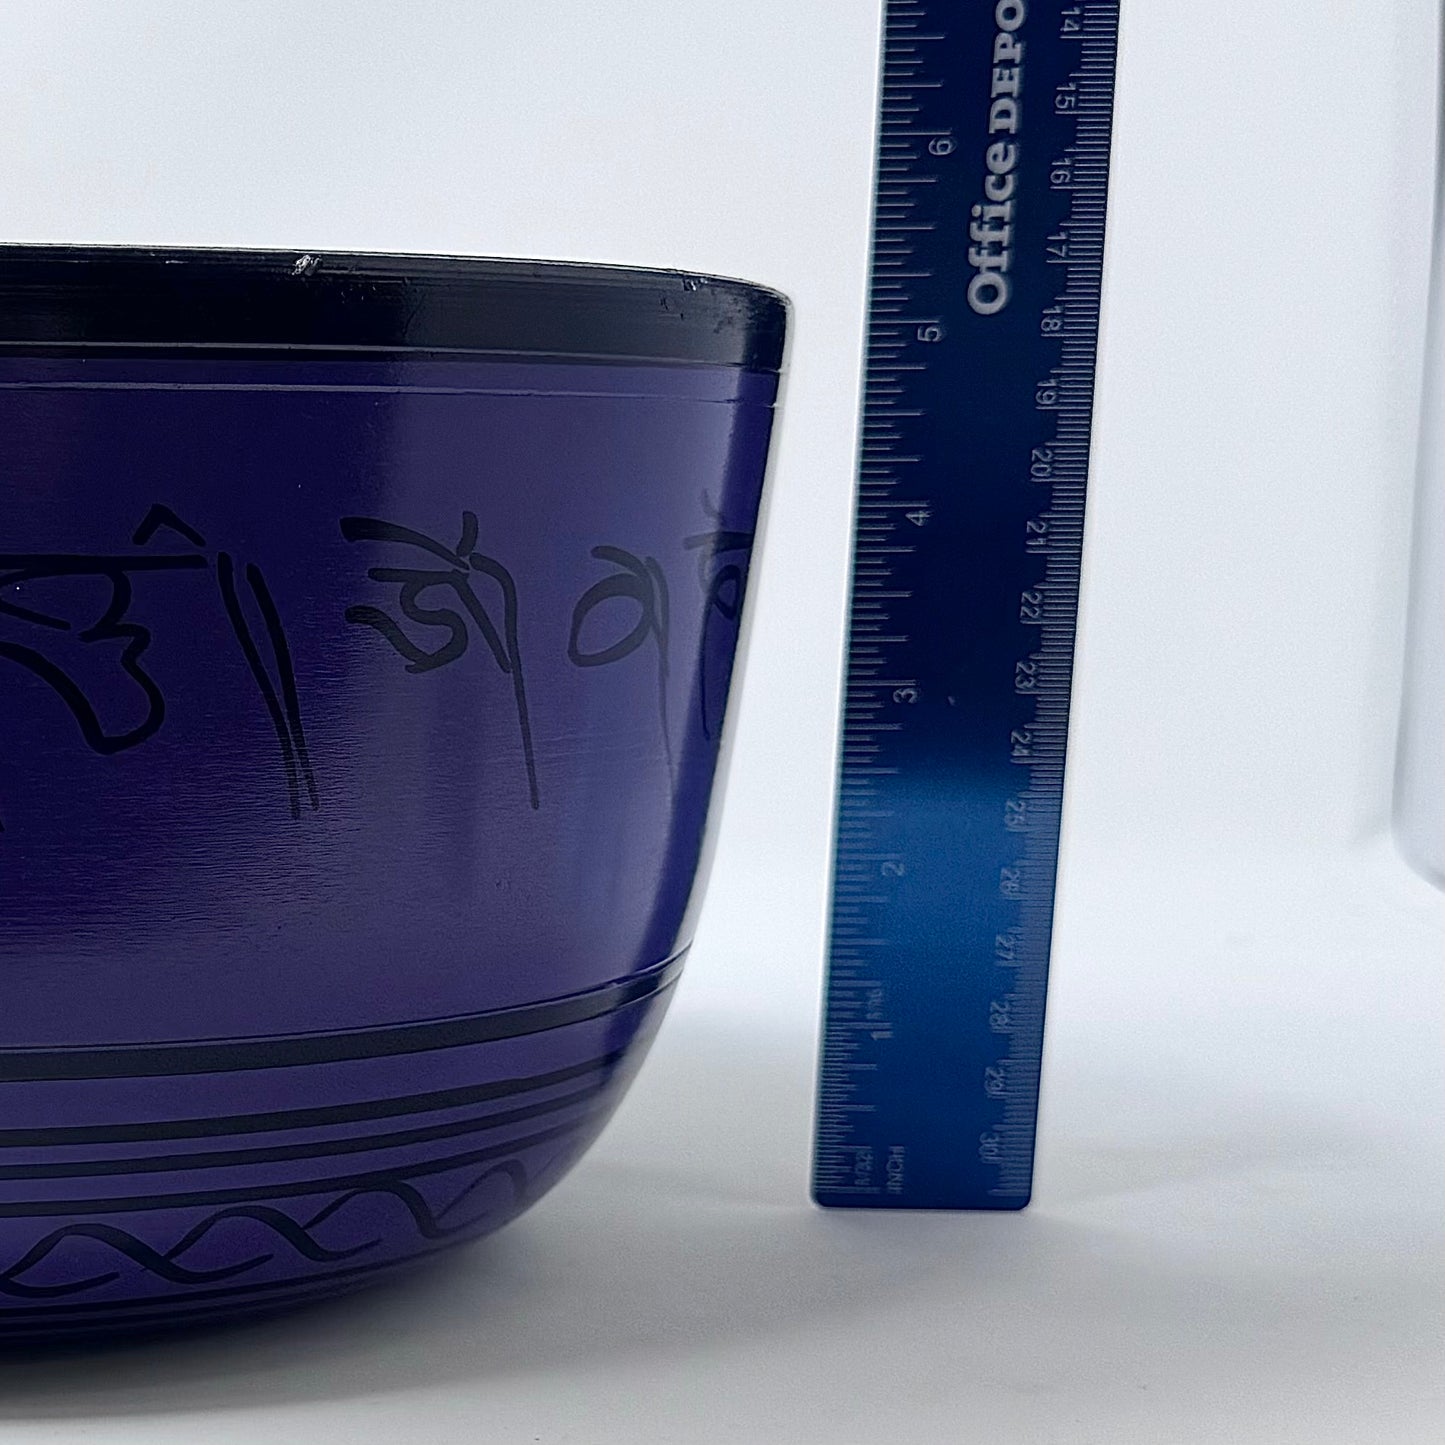 9.5” Diameter Purple Singing Bowl